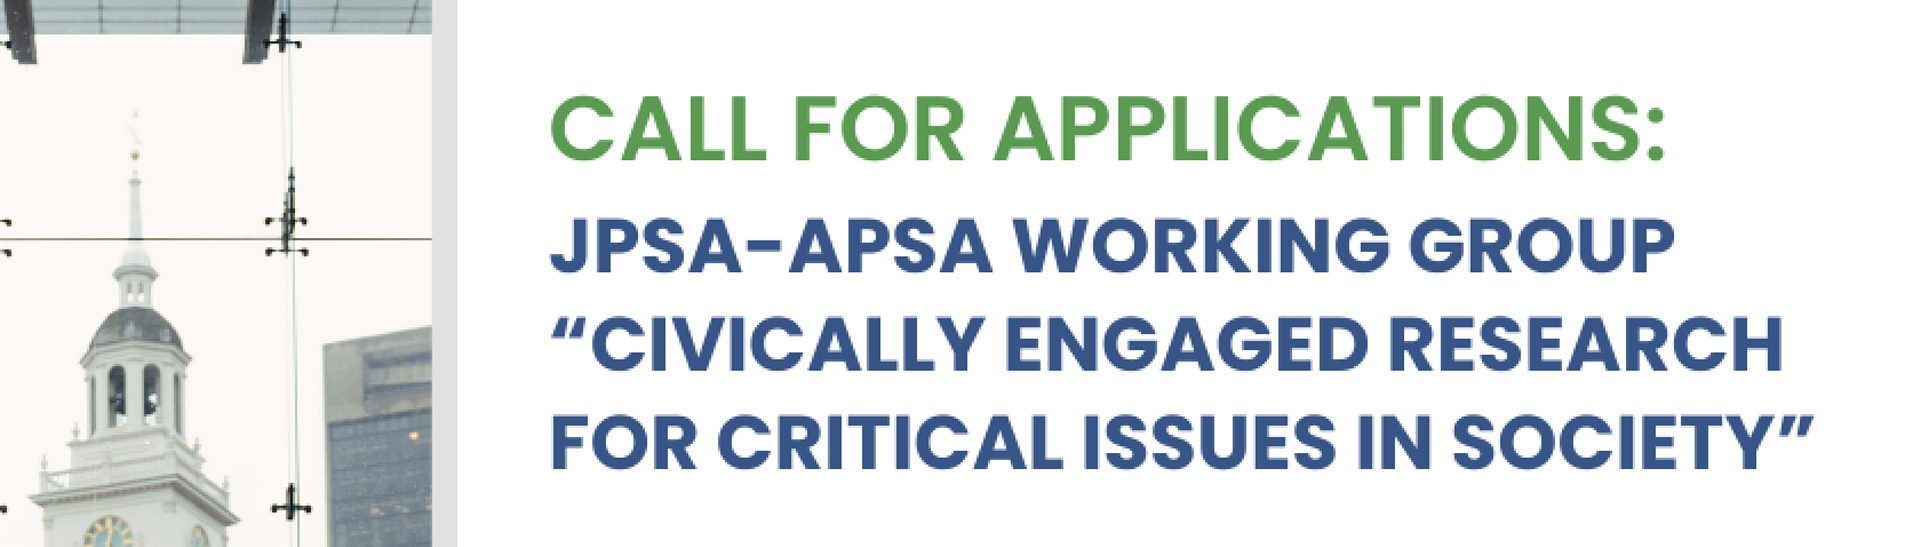 JPSA-APSA working group